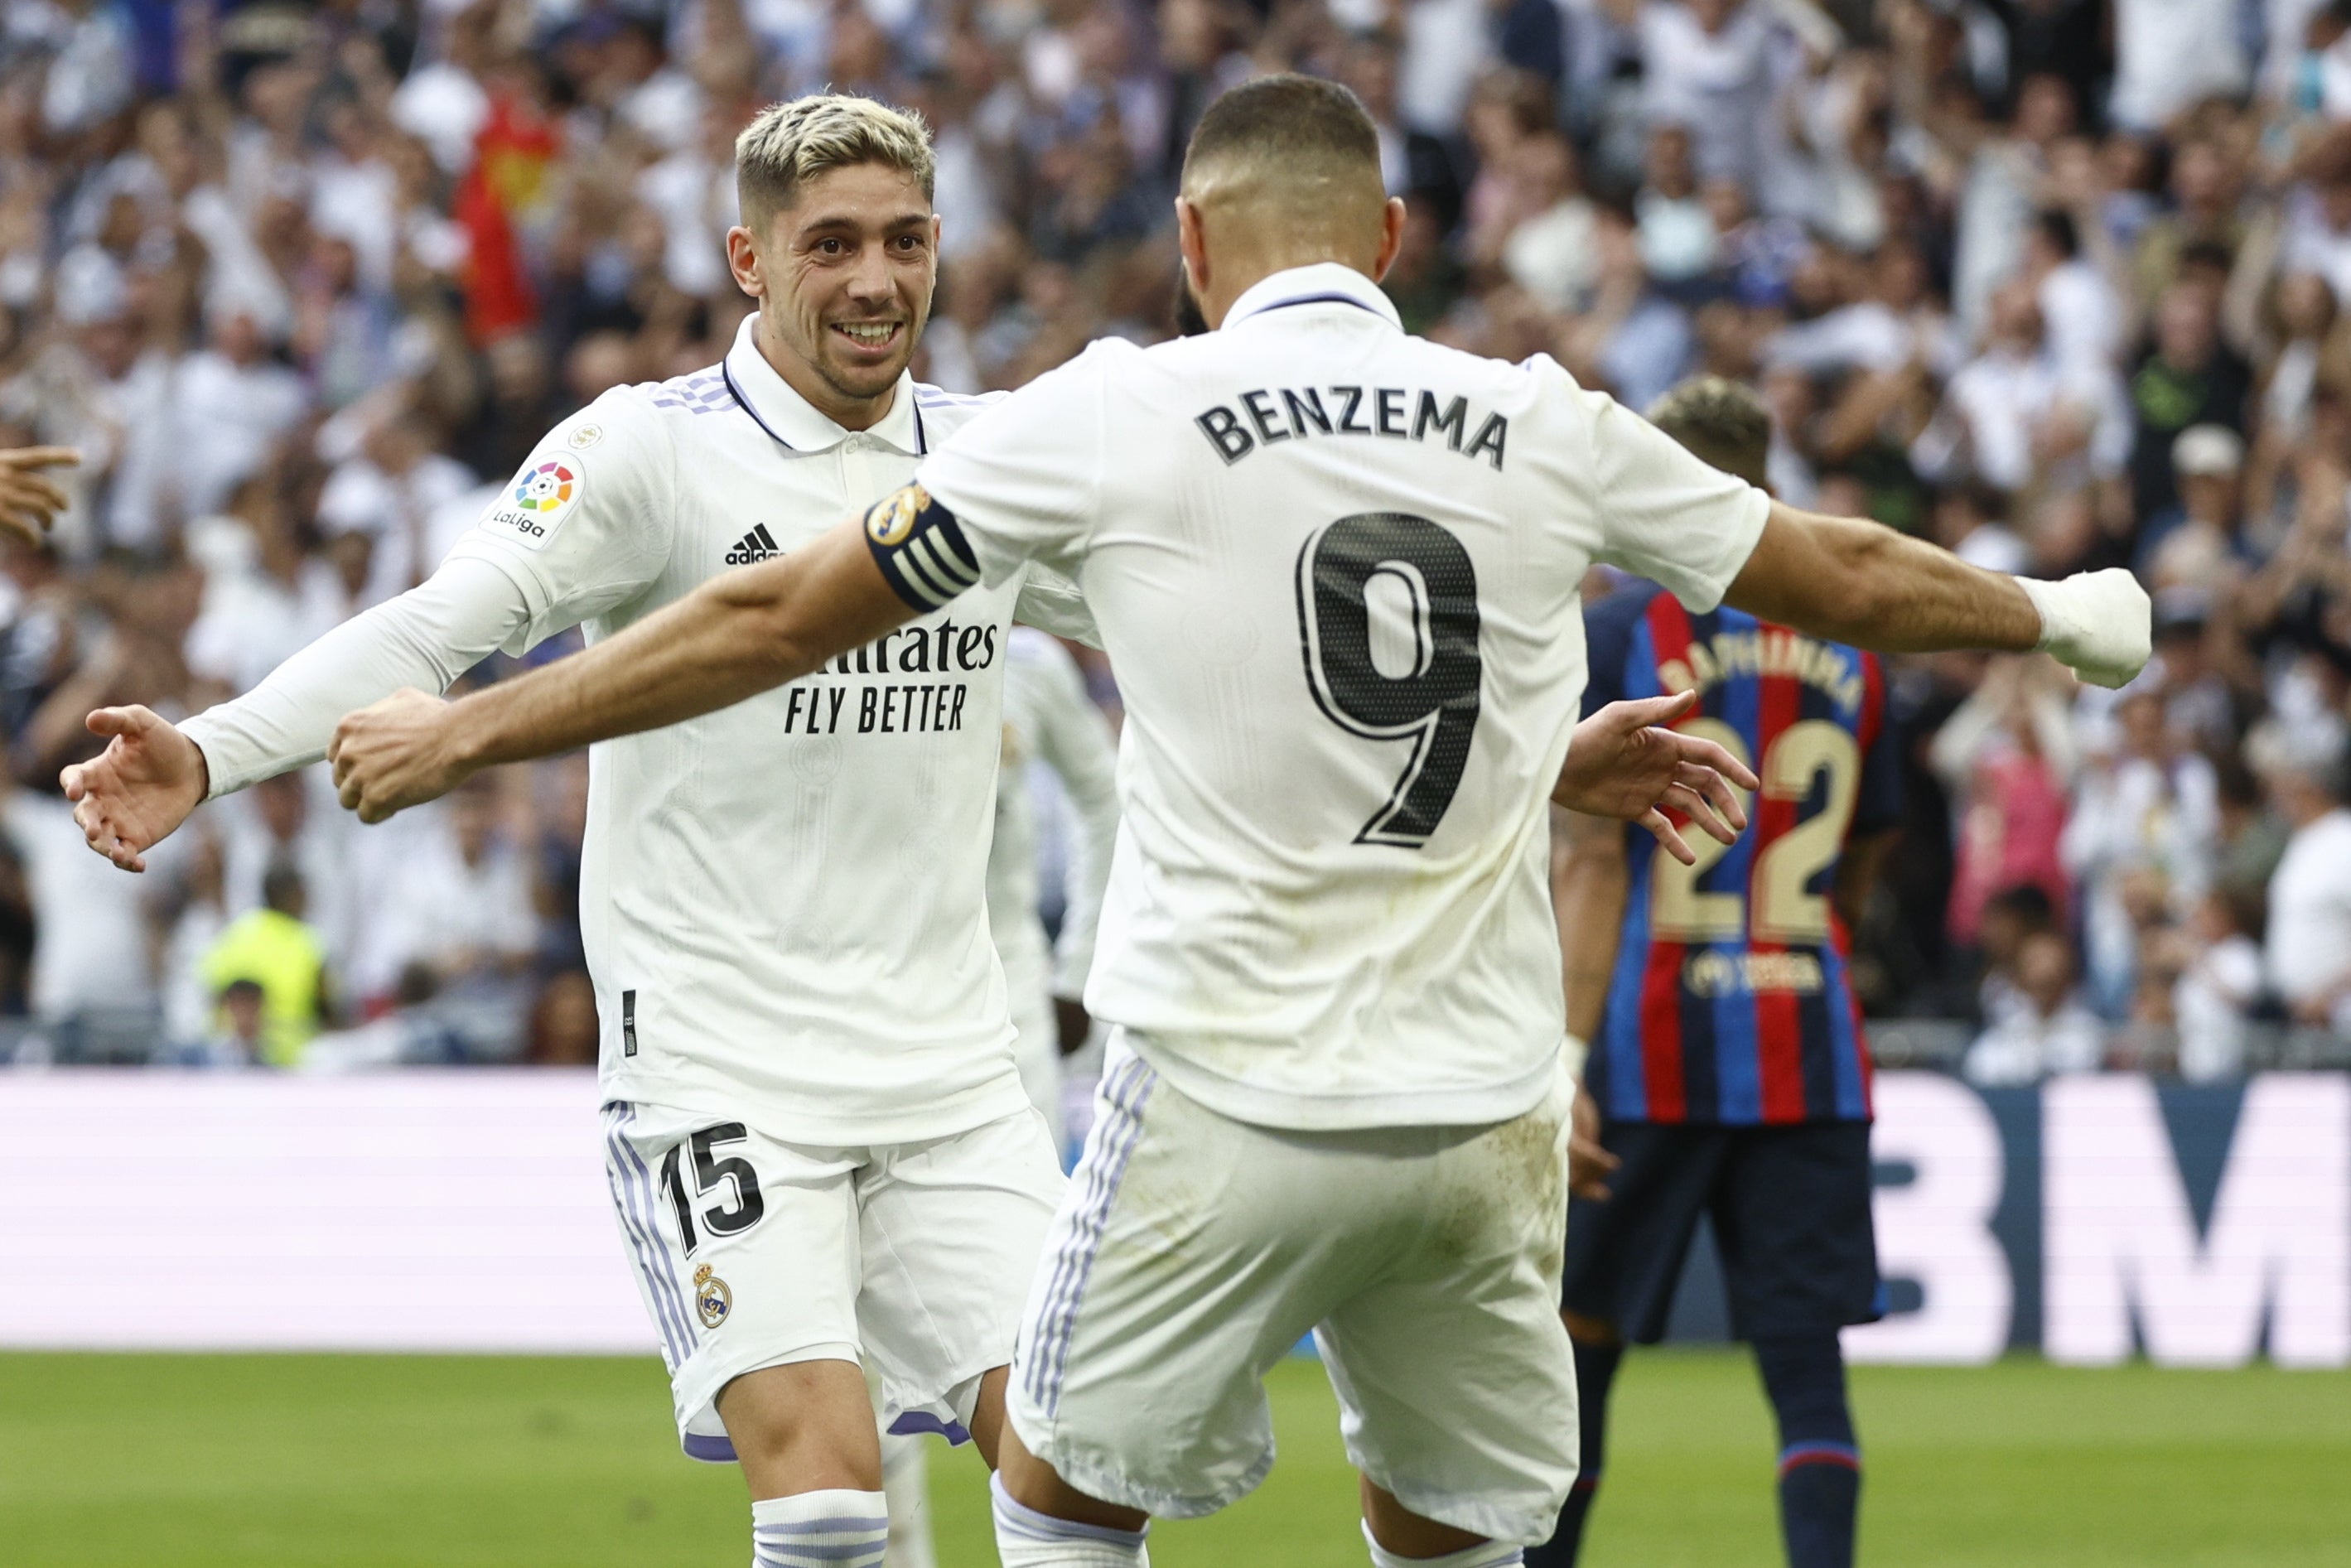 Karim Benzema scores as Real Madrid beat Barcelona in El Clasico to go top of La Liga